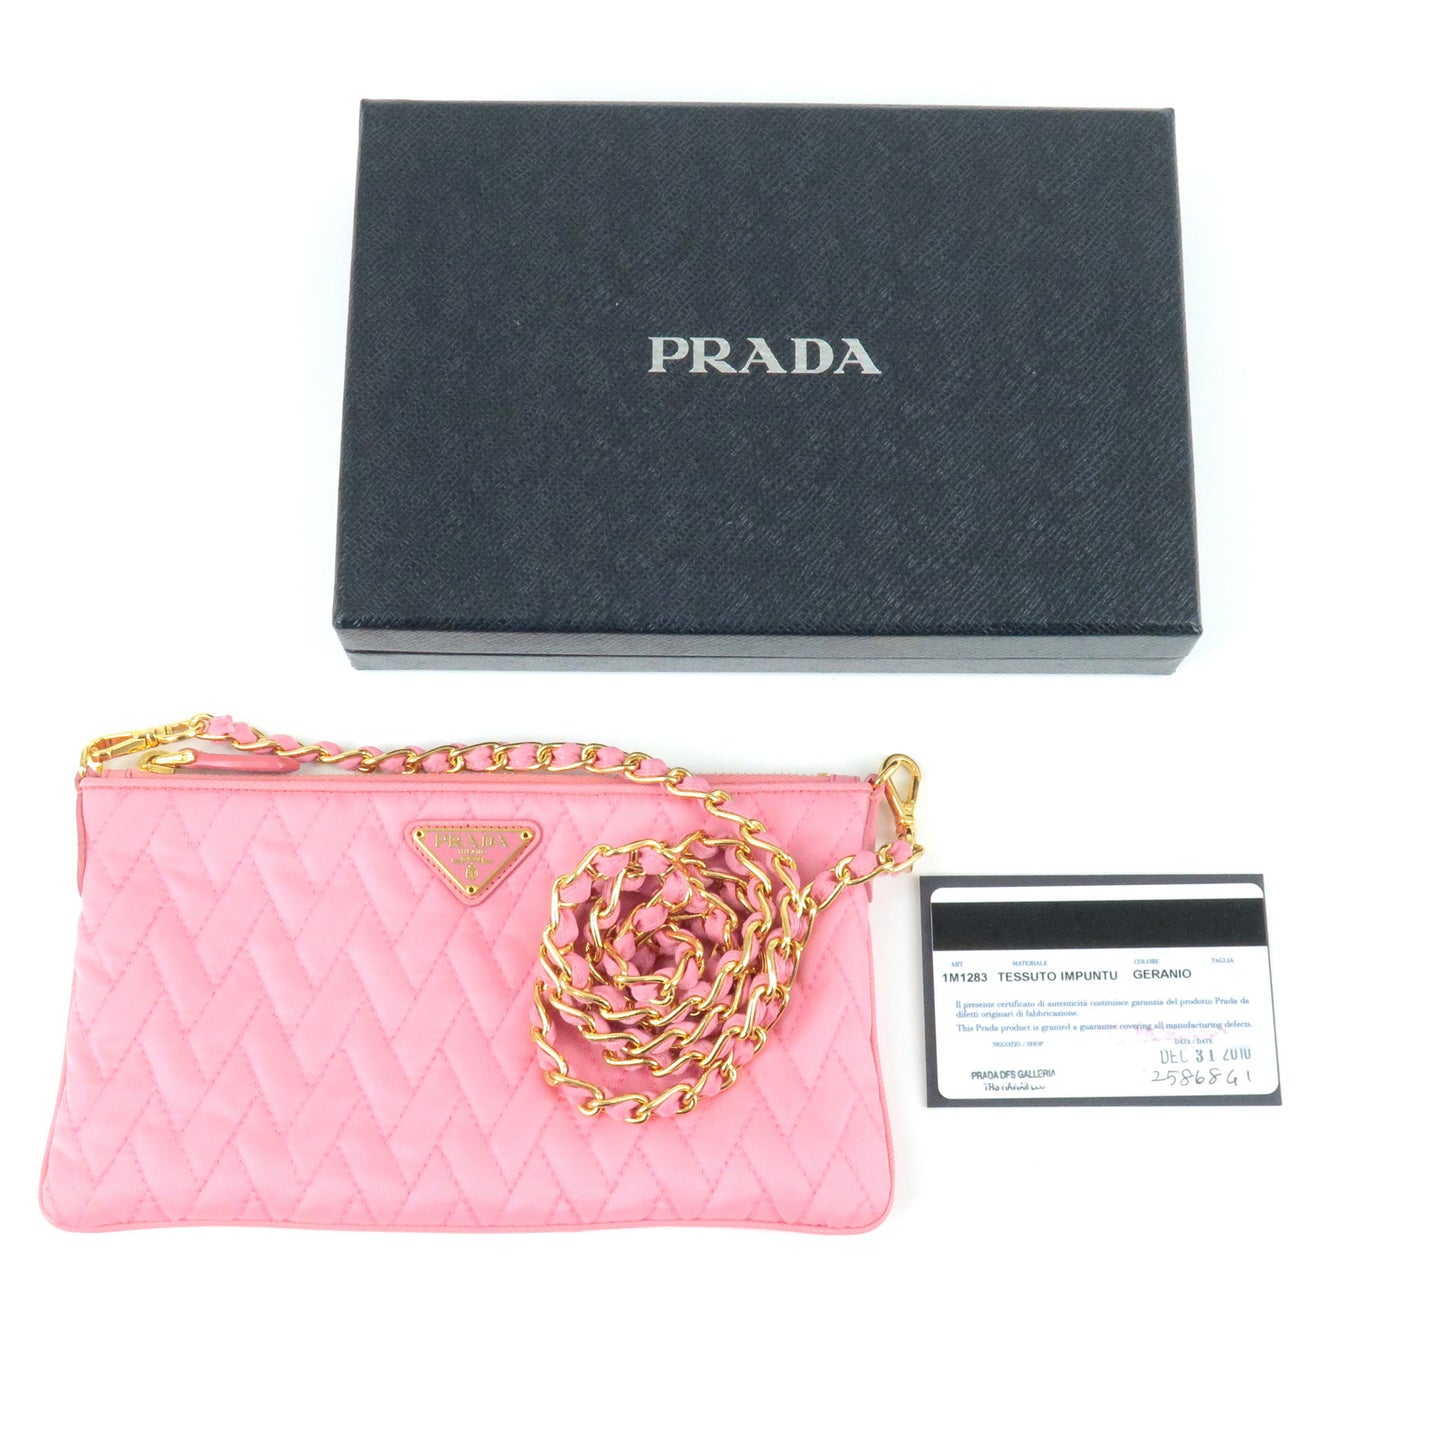 PRADA Logo Nylon Leather Chain Shoulder Bag Pink 1M1283